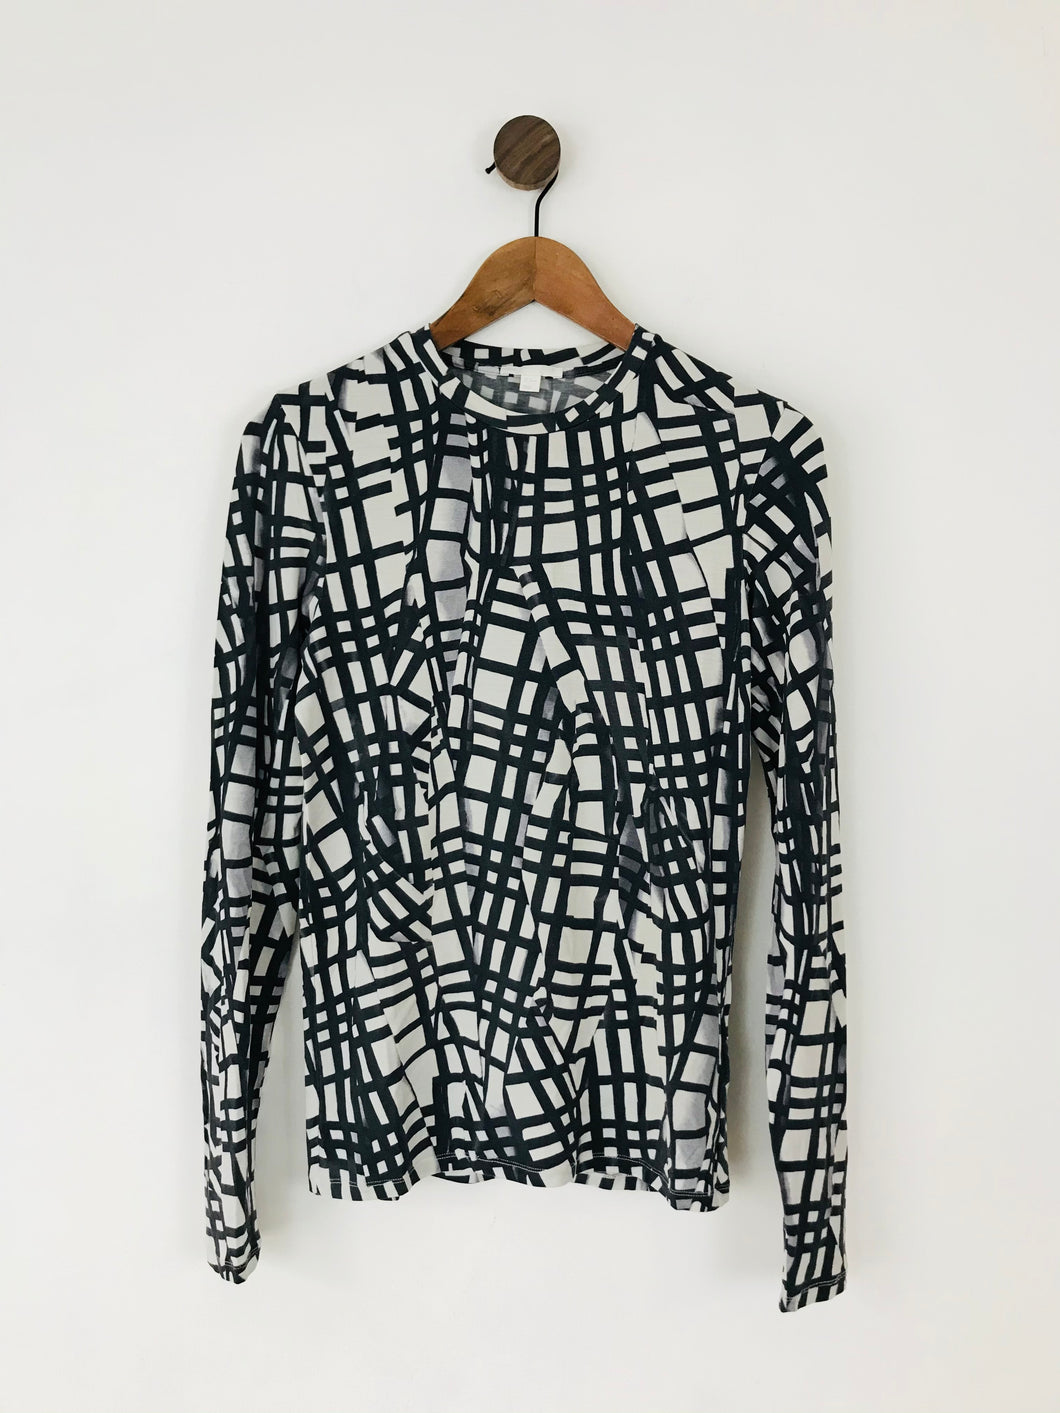 Cos Women’s Abstract Print Long Sleeve Tshirt | UK10-12 M | Black White